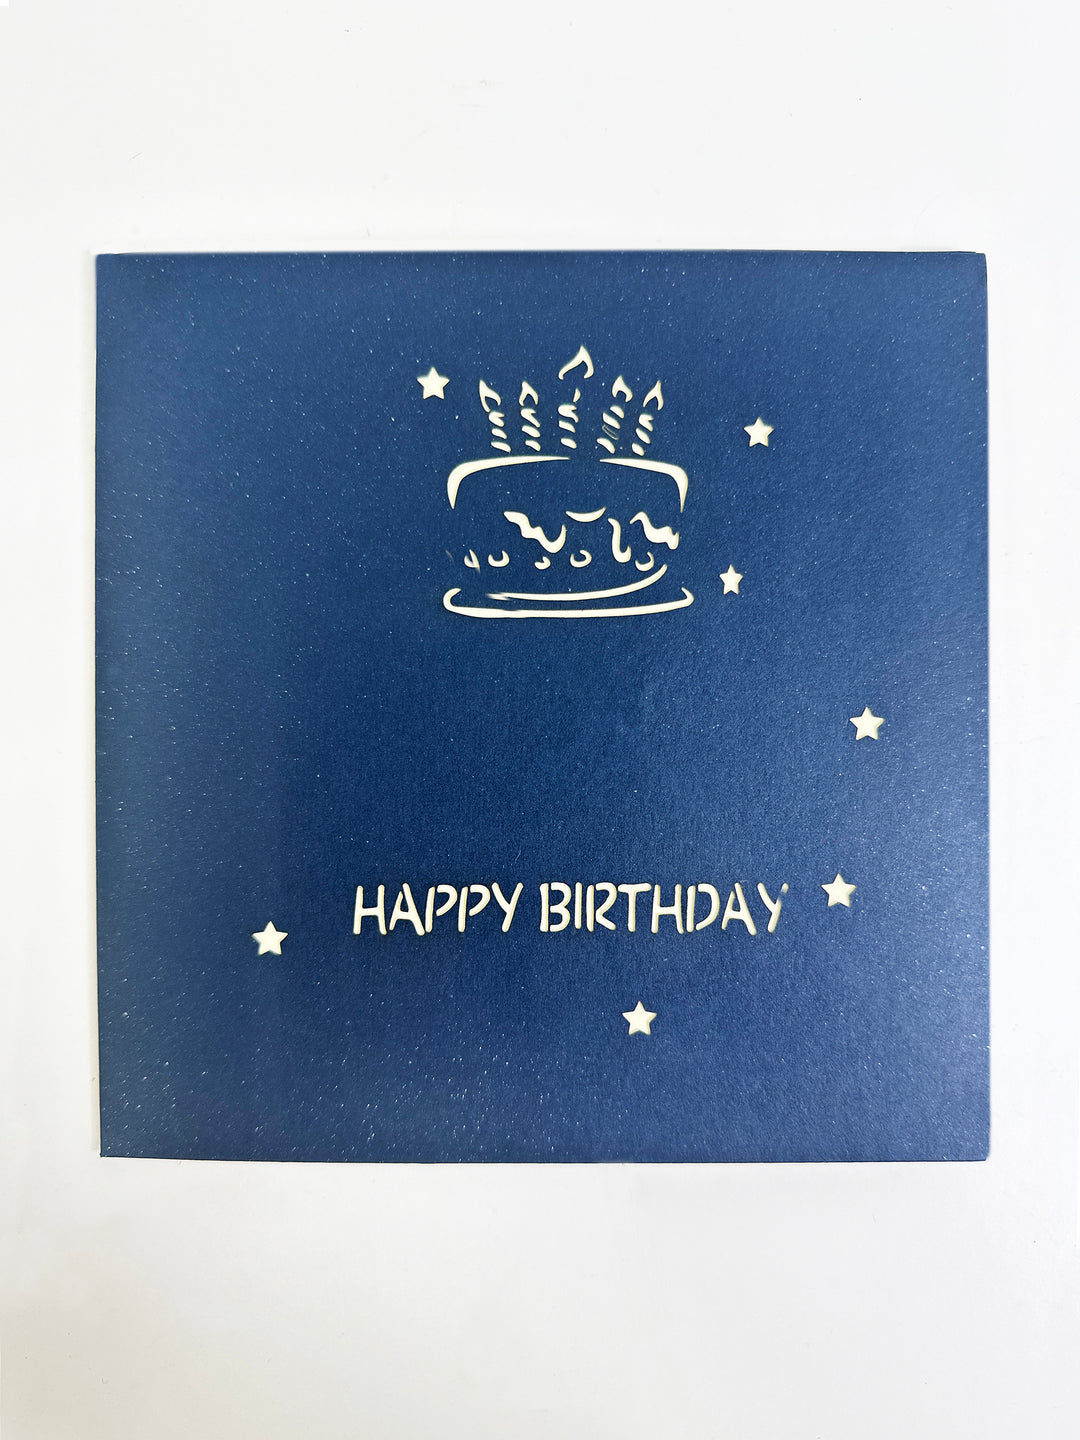 3 Tier Birthday Cake Pop-Up Birthday Card